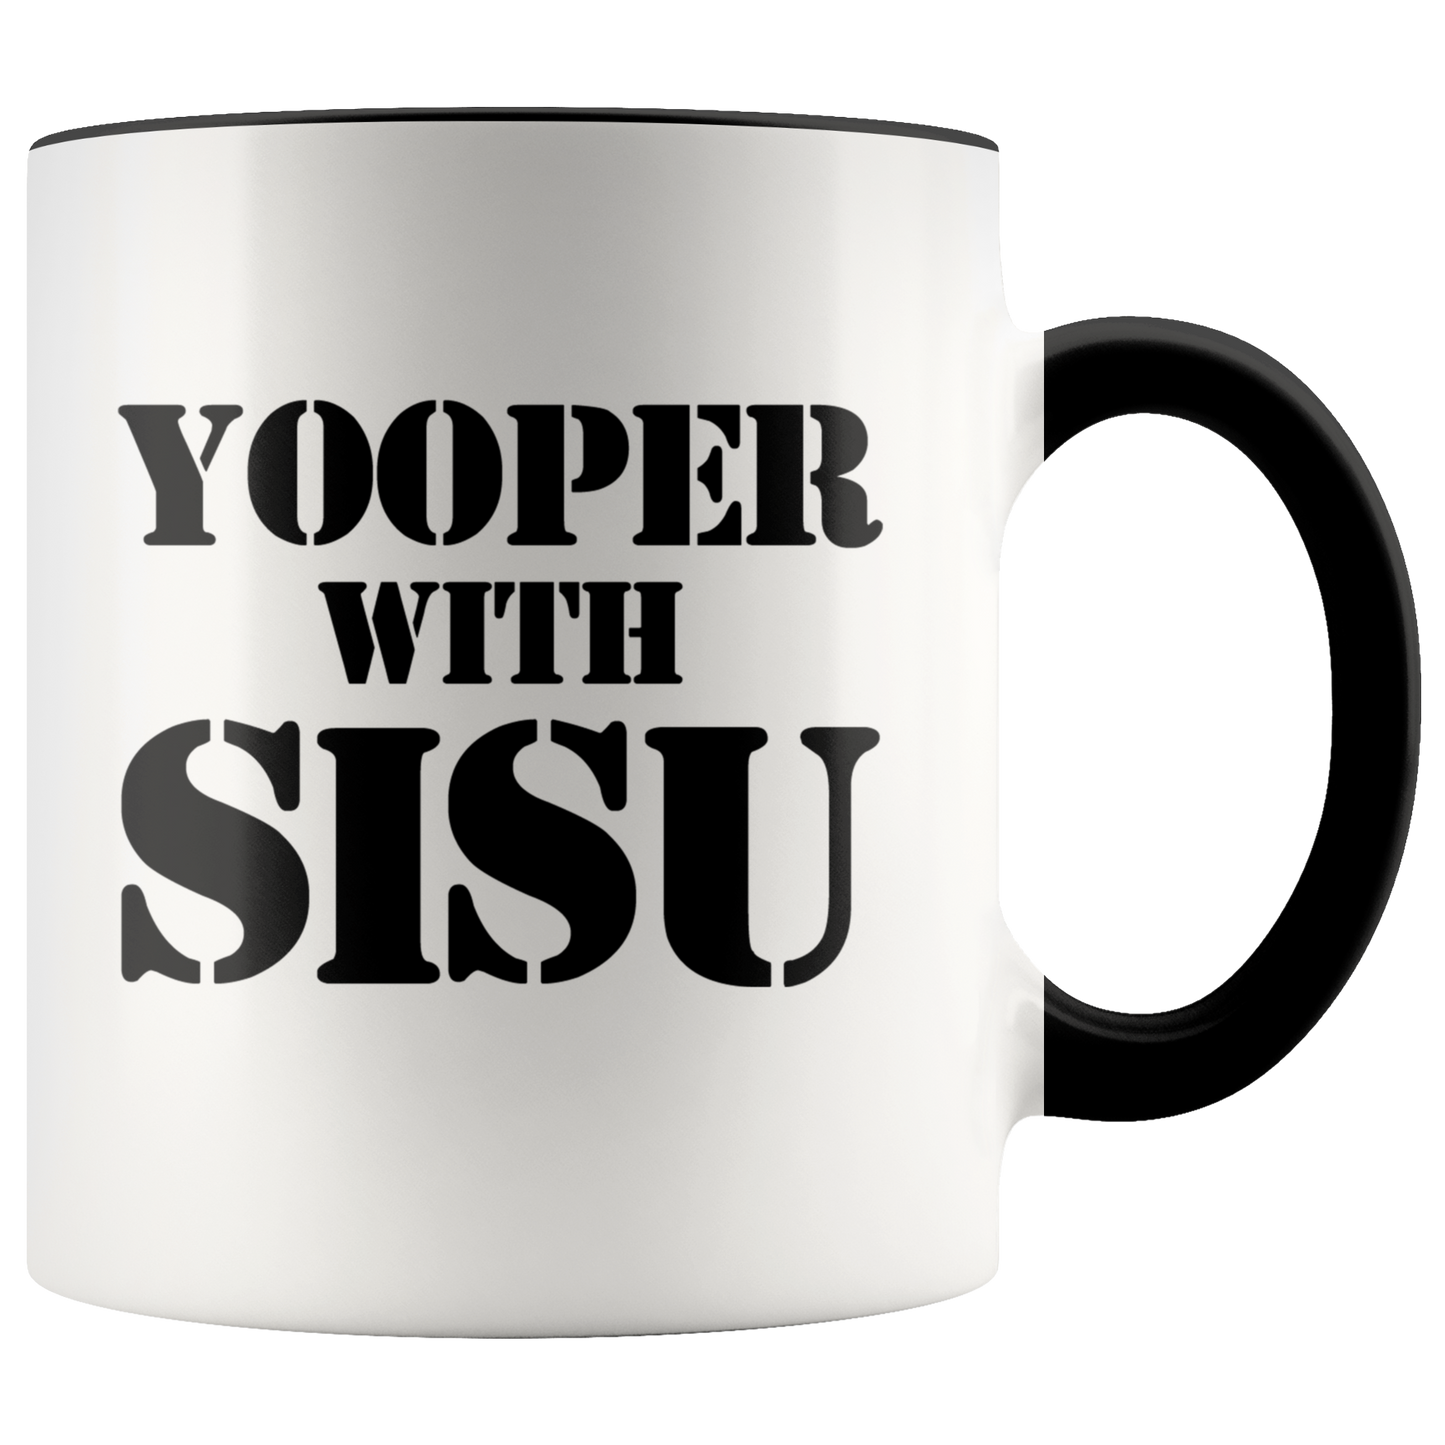 Yooper with Sisu Mug | Finnish Gift | Upper Michigan Residents